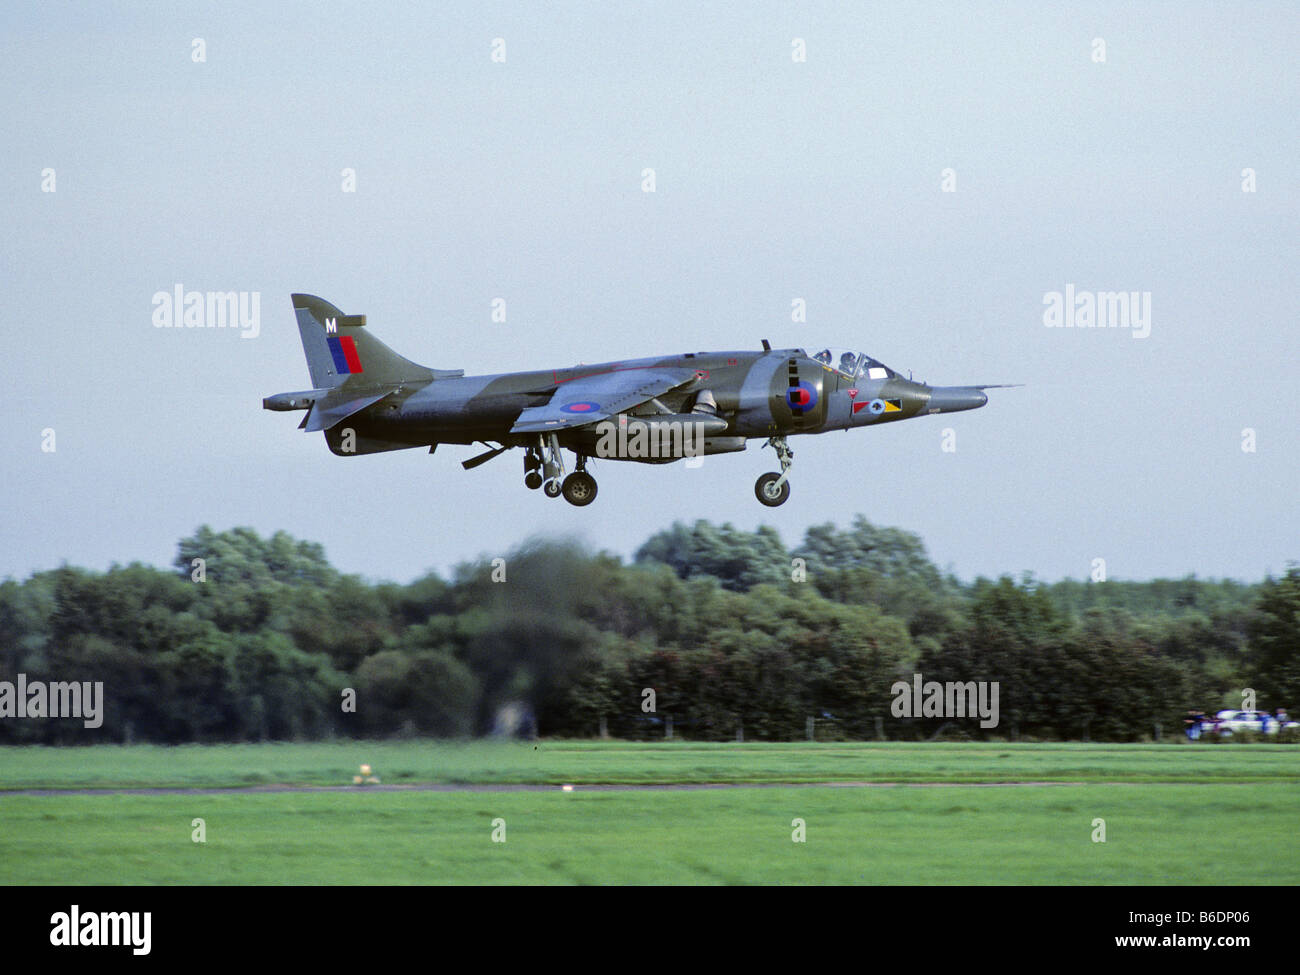 RAF HAWKER SIDDELEY Harrier GR-1 volare a bassa velocità con Hovering Landing Gear Down Foto Stock